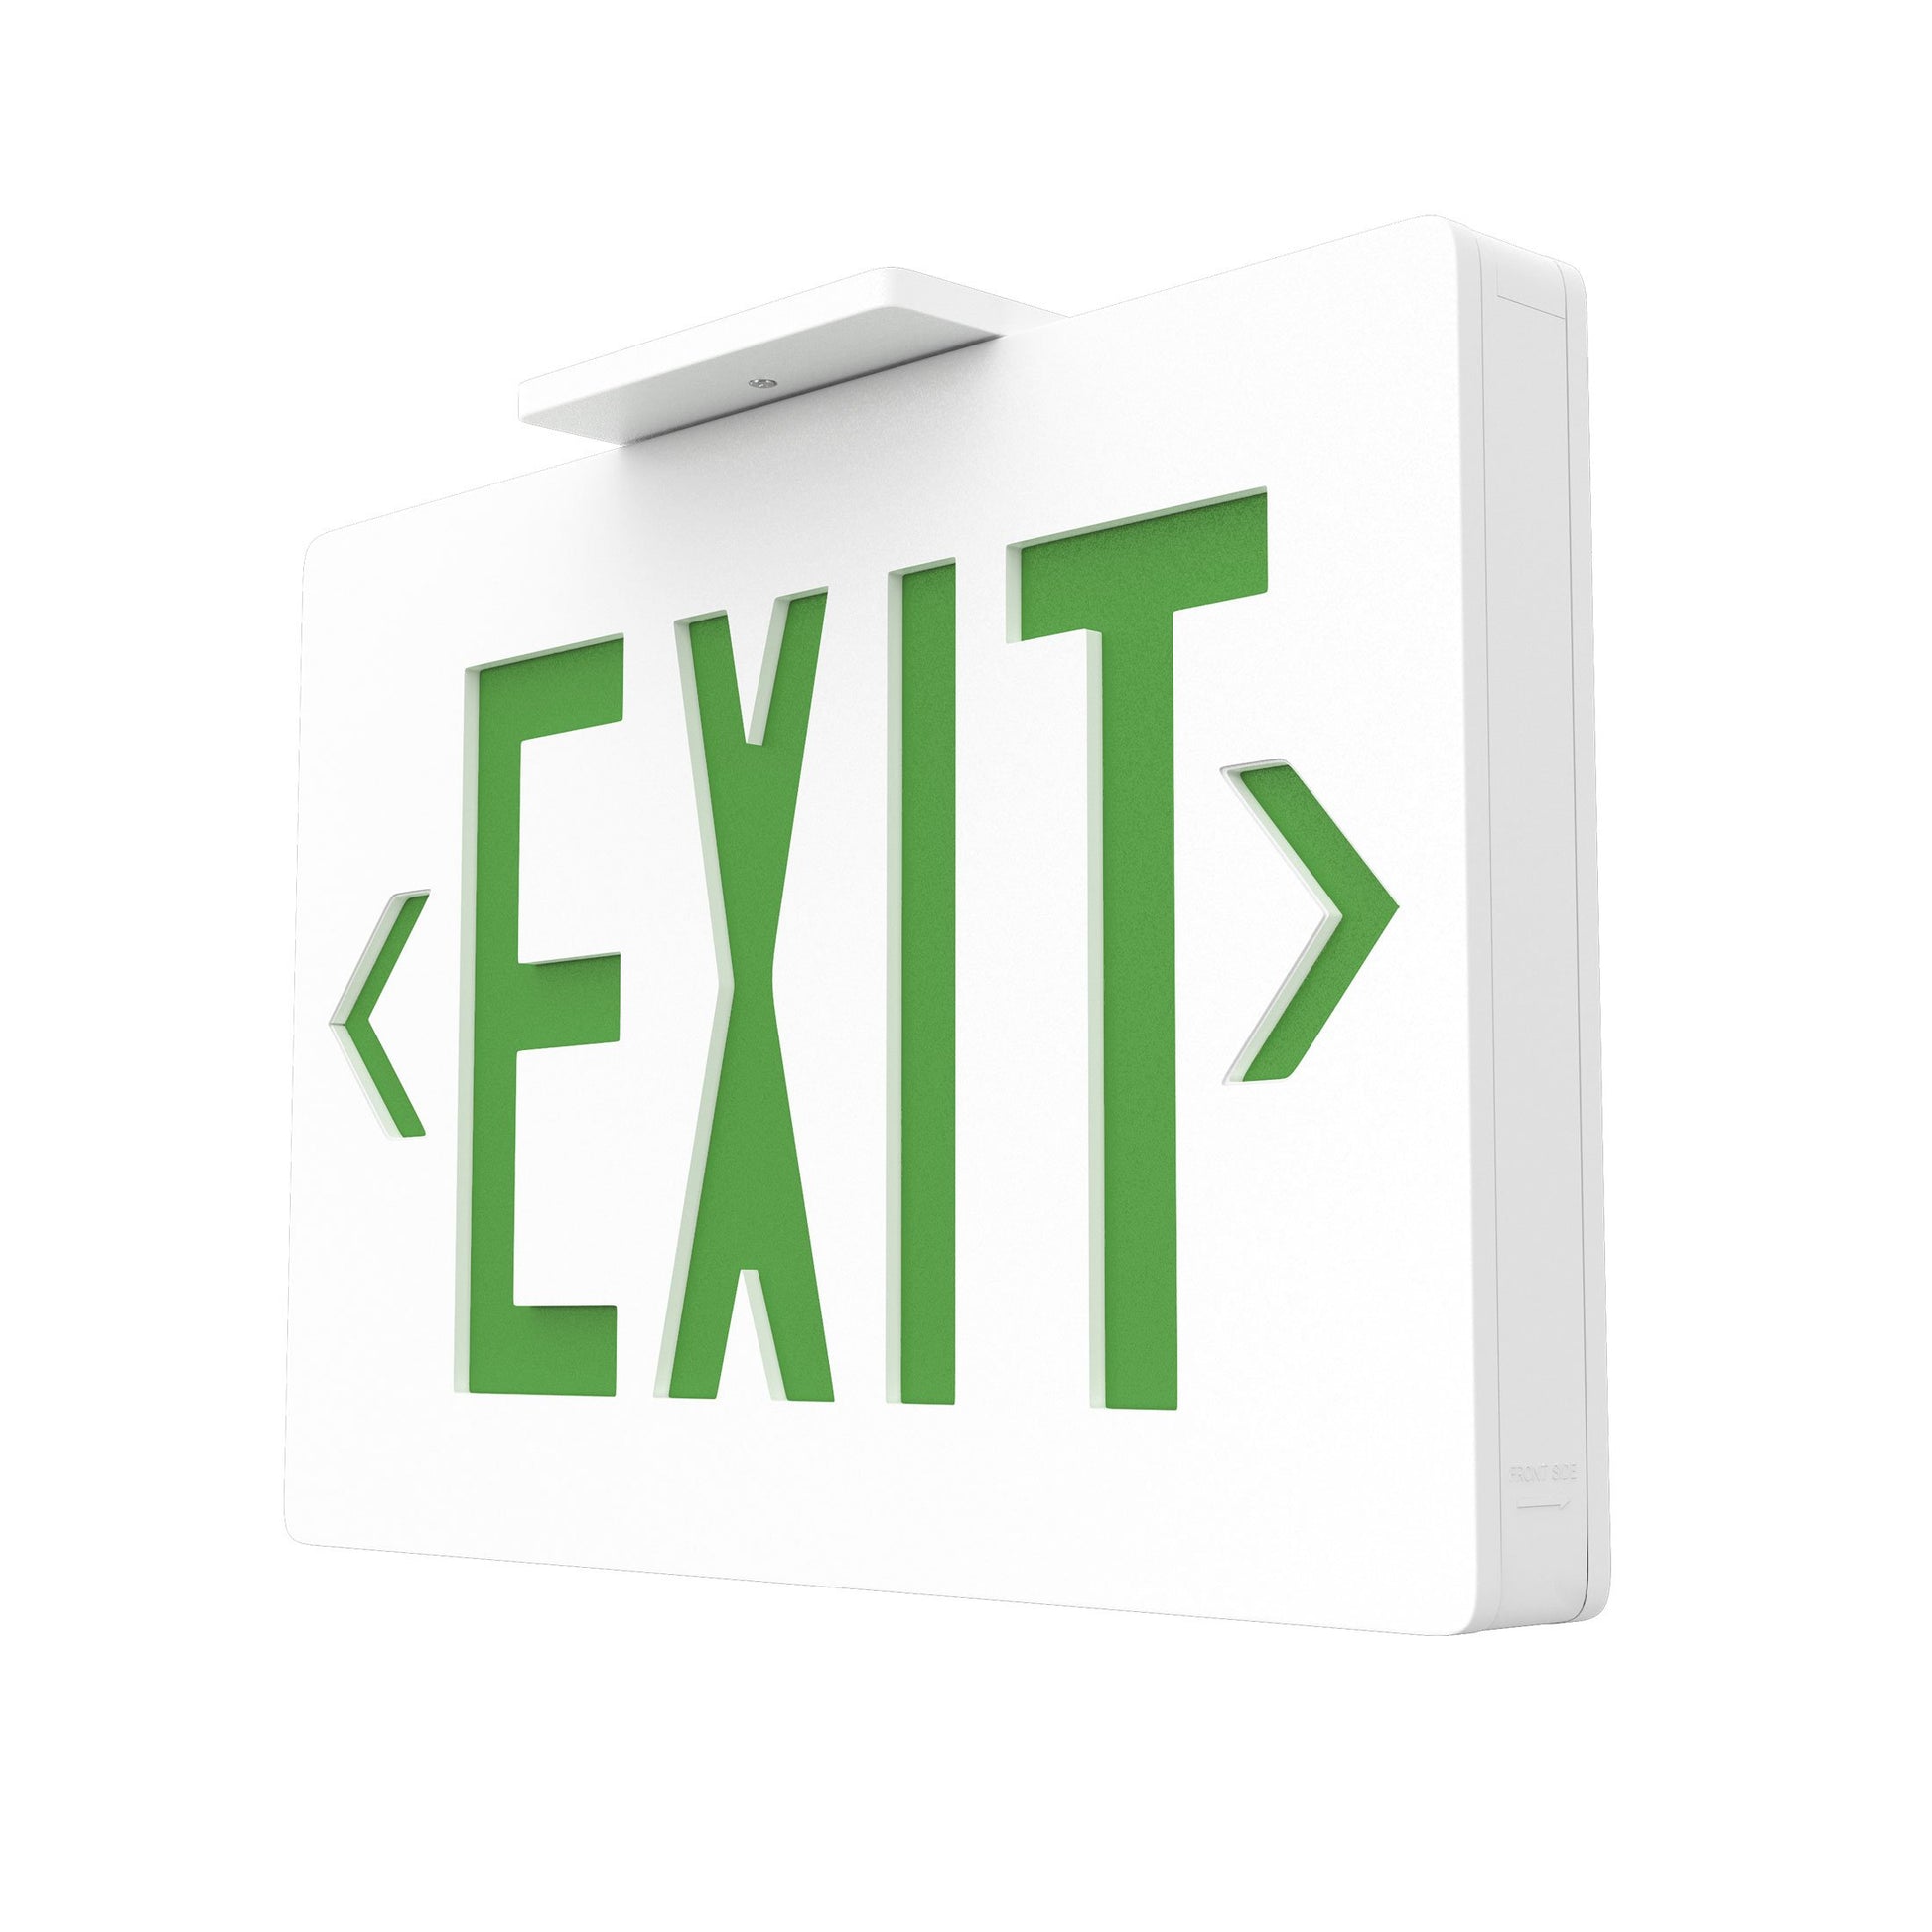 emergency-light-exit-sigh-4w-green-ul-listed